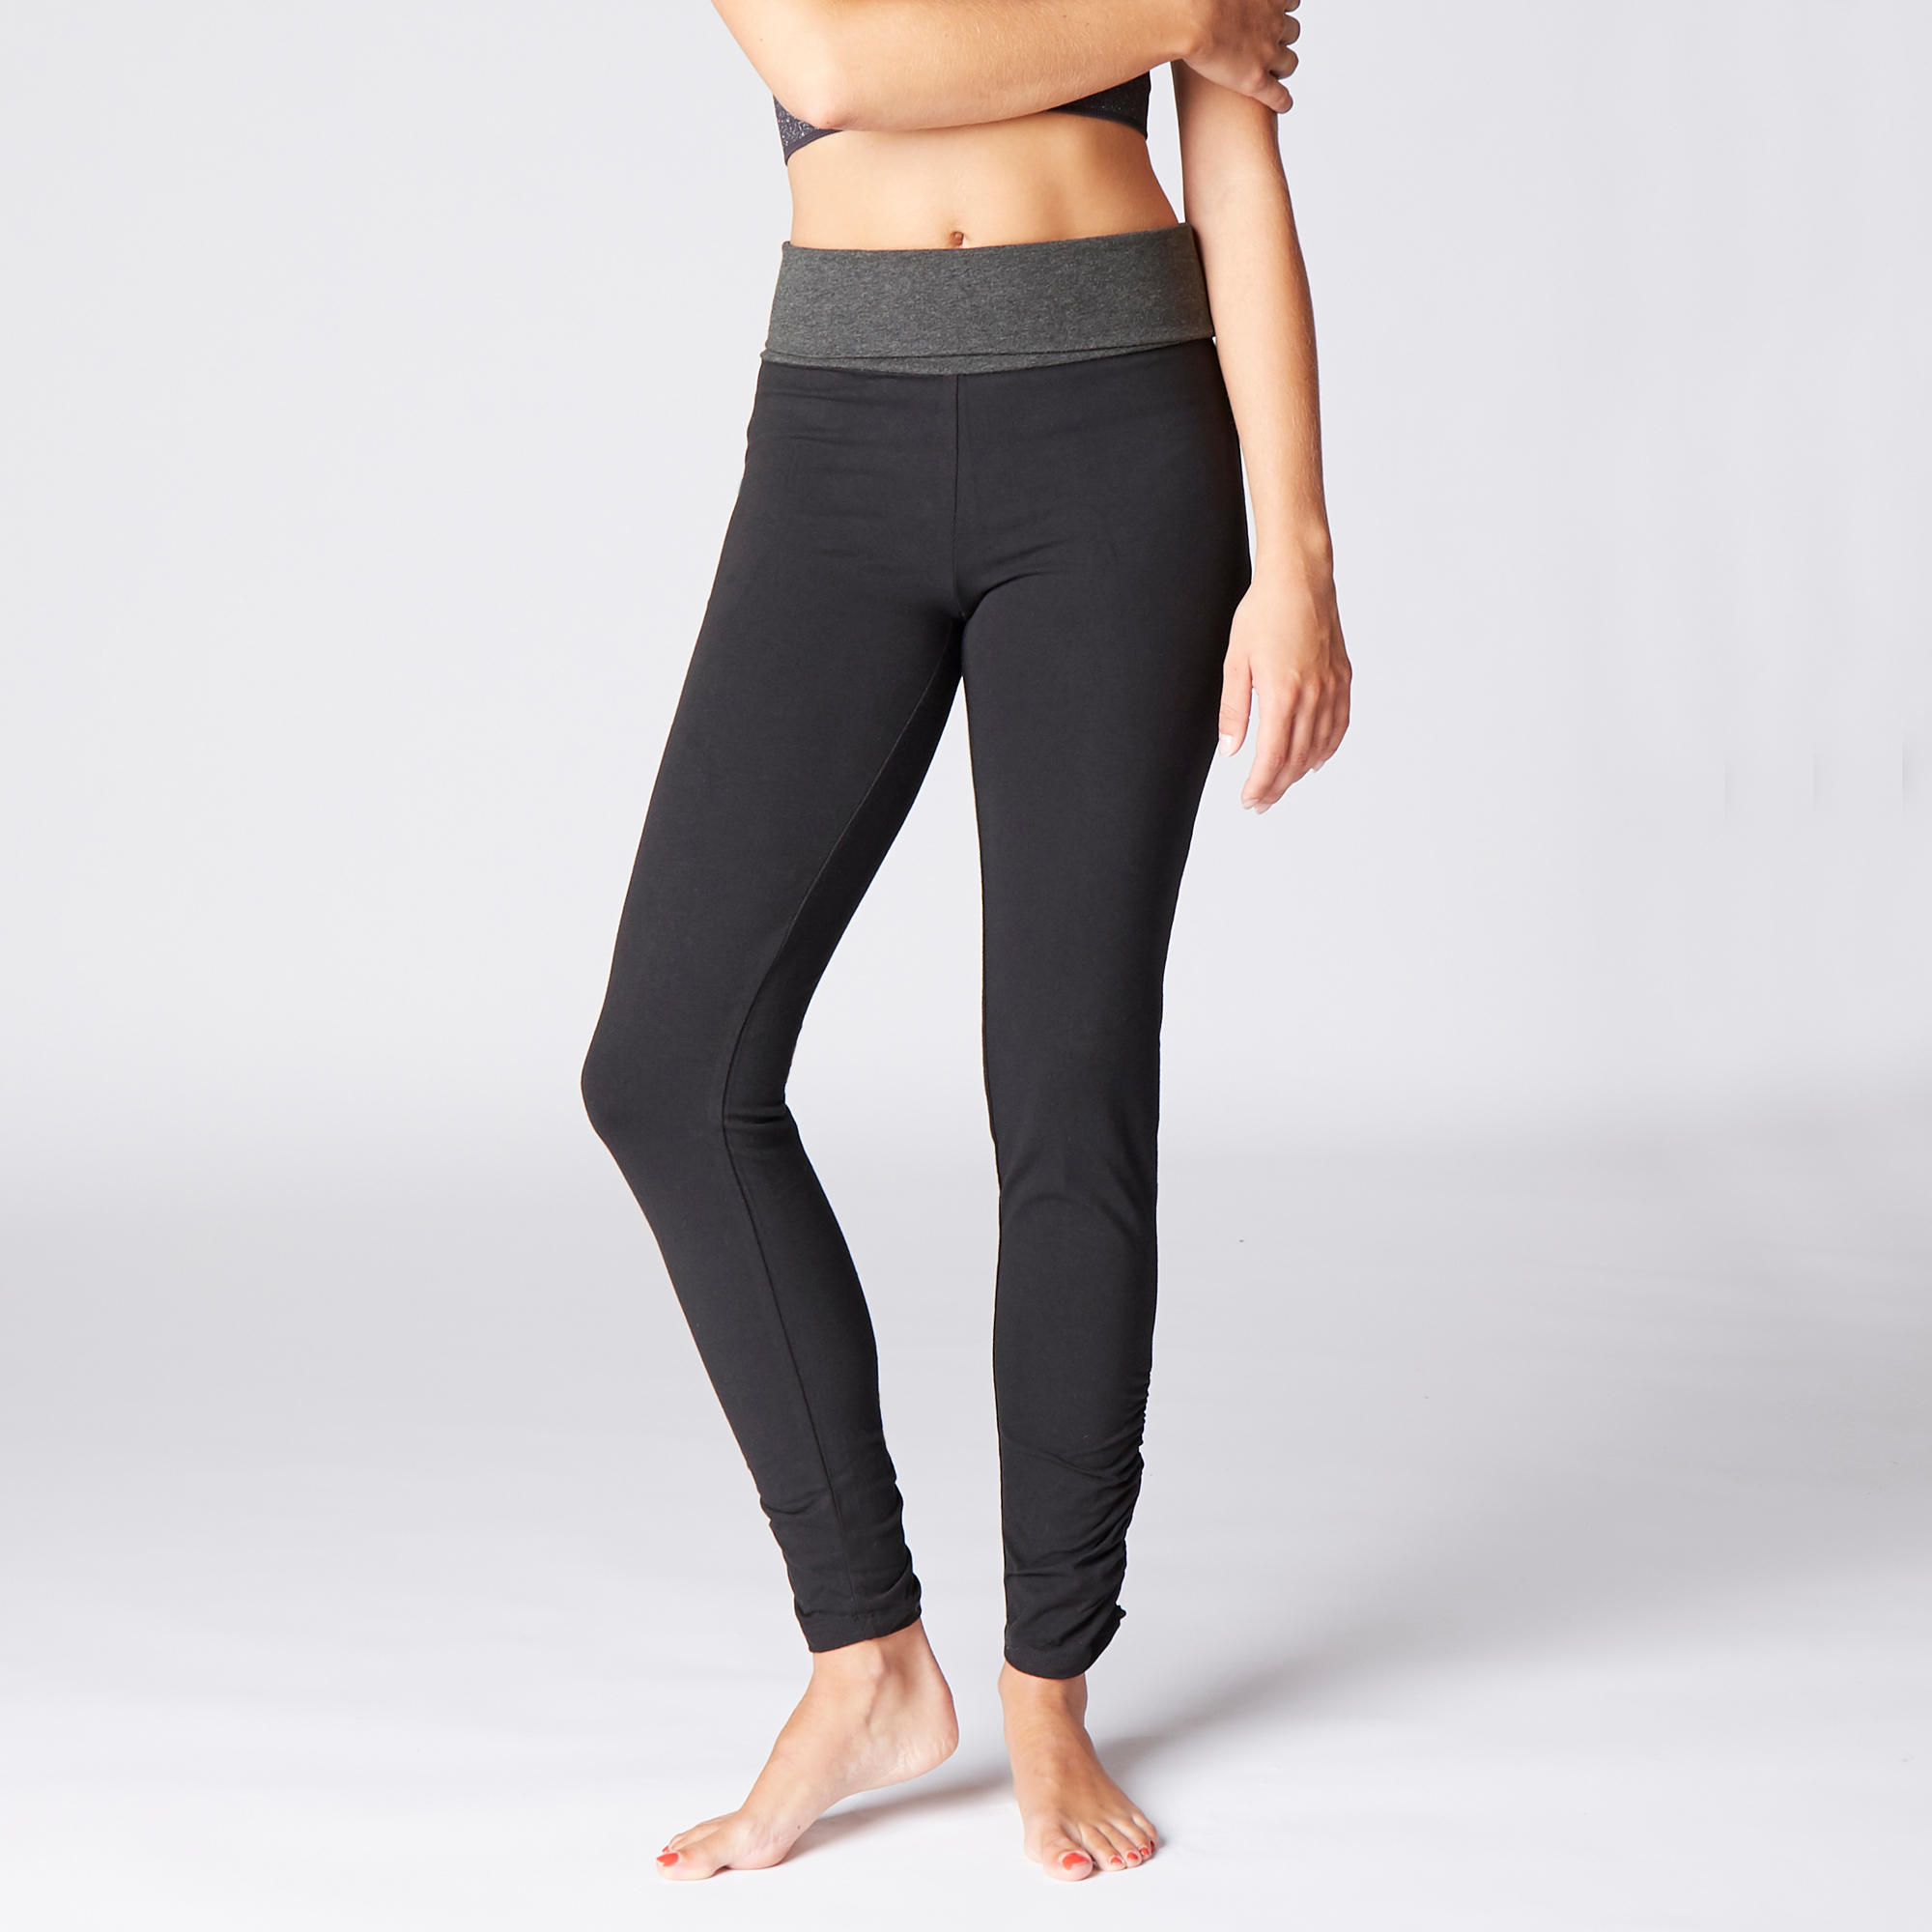 Buy Nite Flite Grey Cotton Yoga Pants for Women's Online @ Tata CLiQ